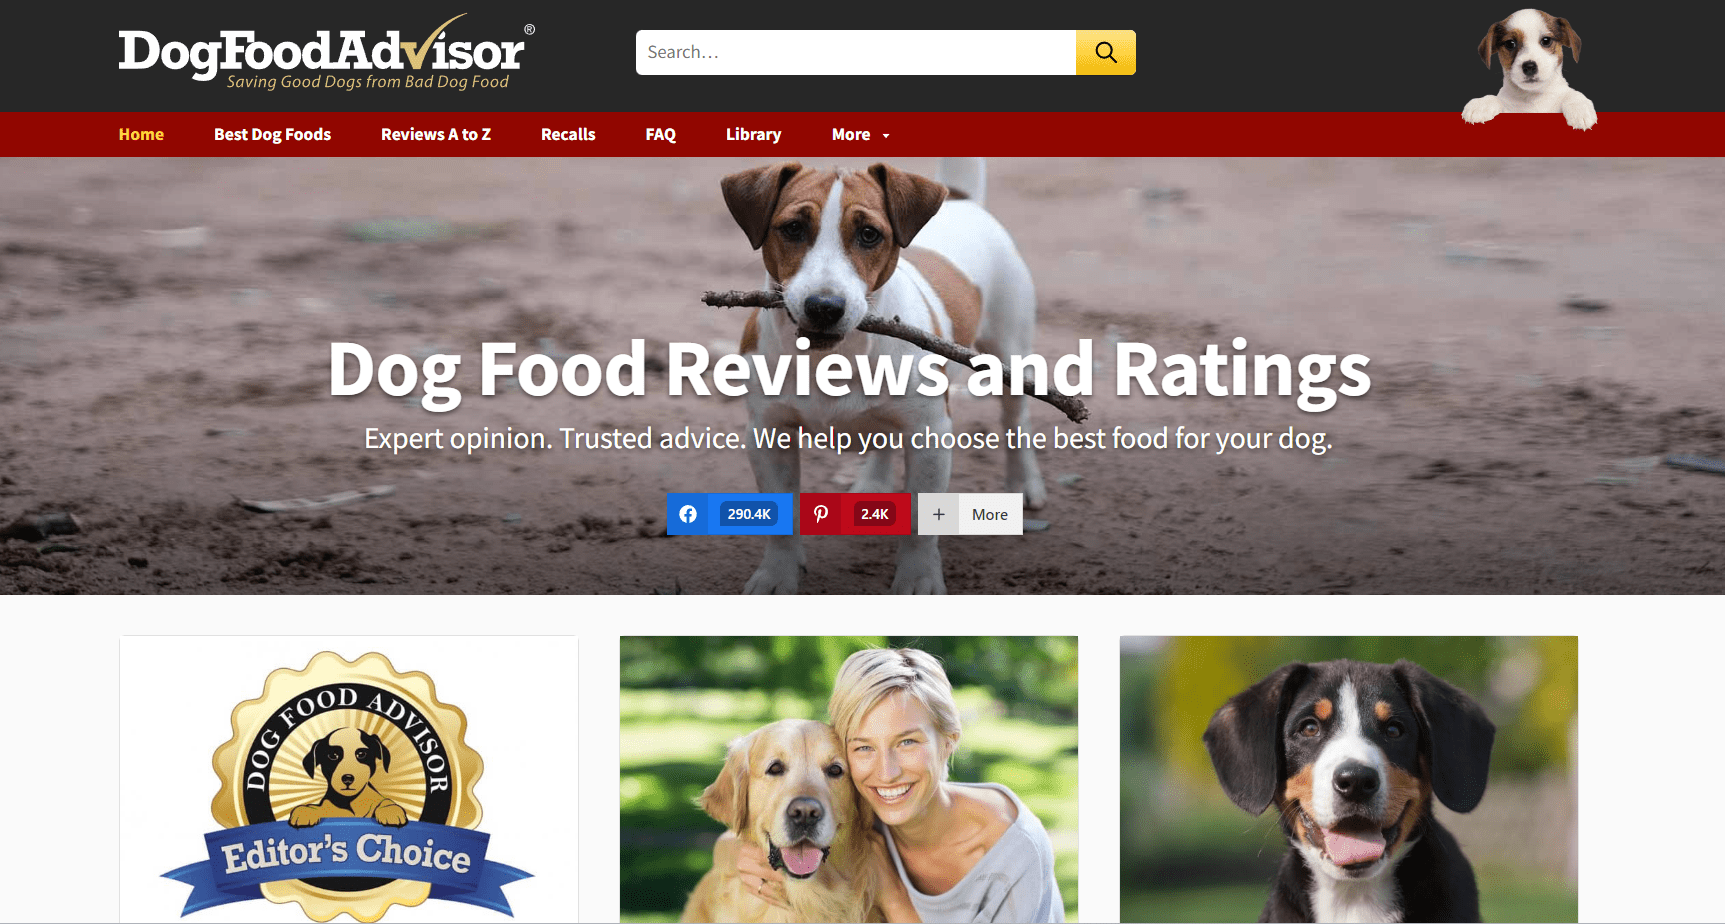 Dog Food Advisor Overview